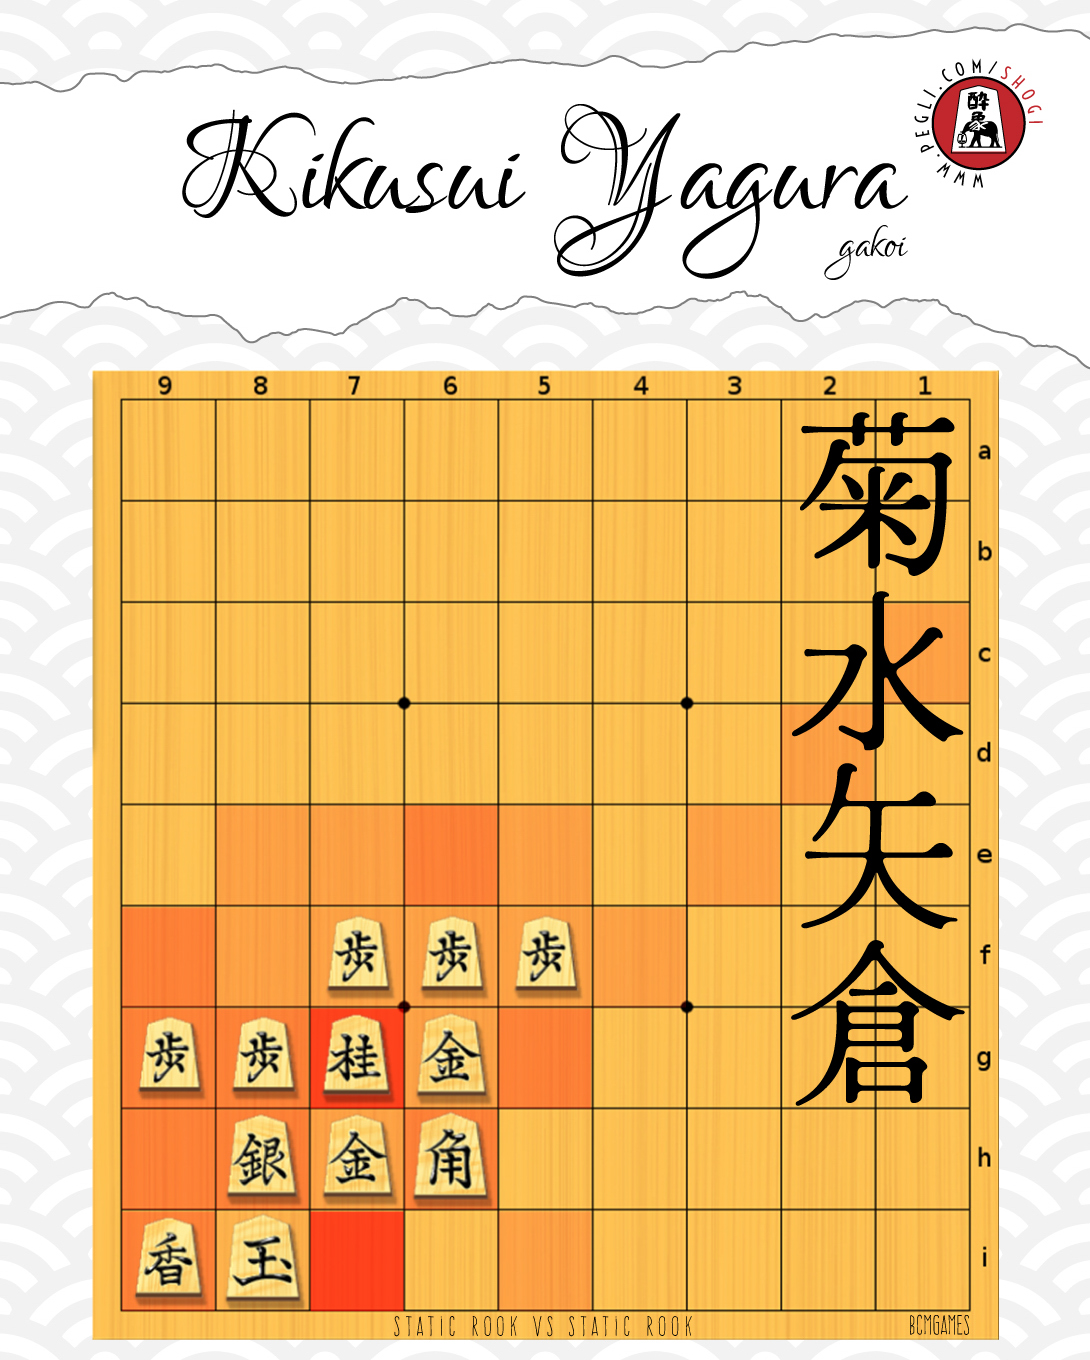 shogi - kakoi: kikusui yagura gakoi